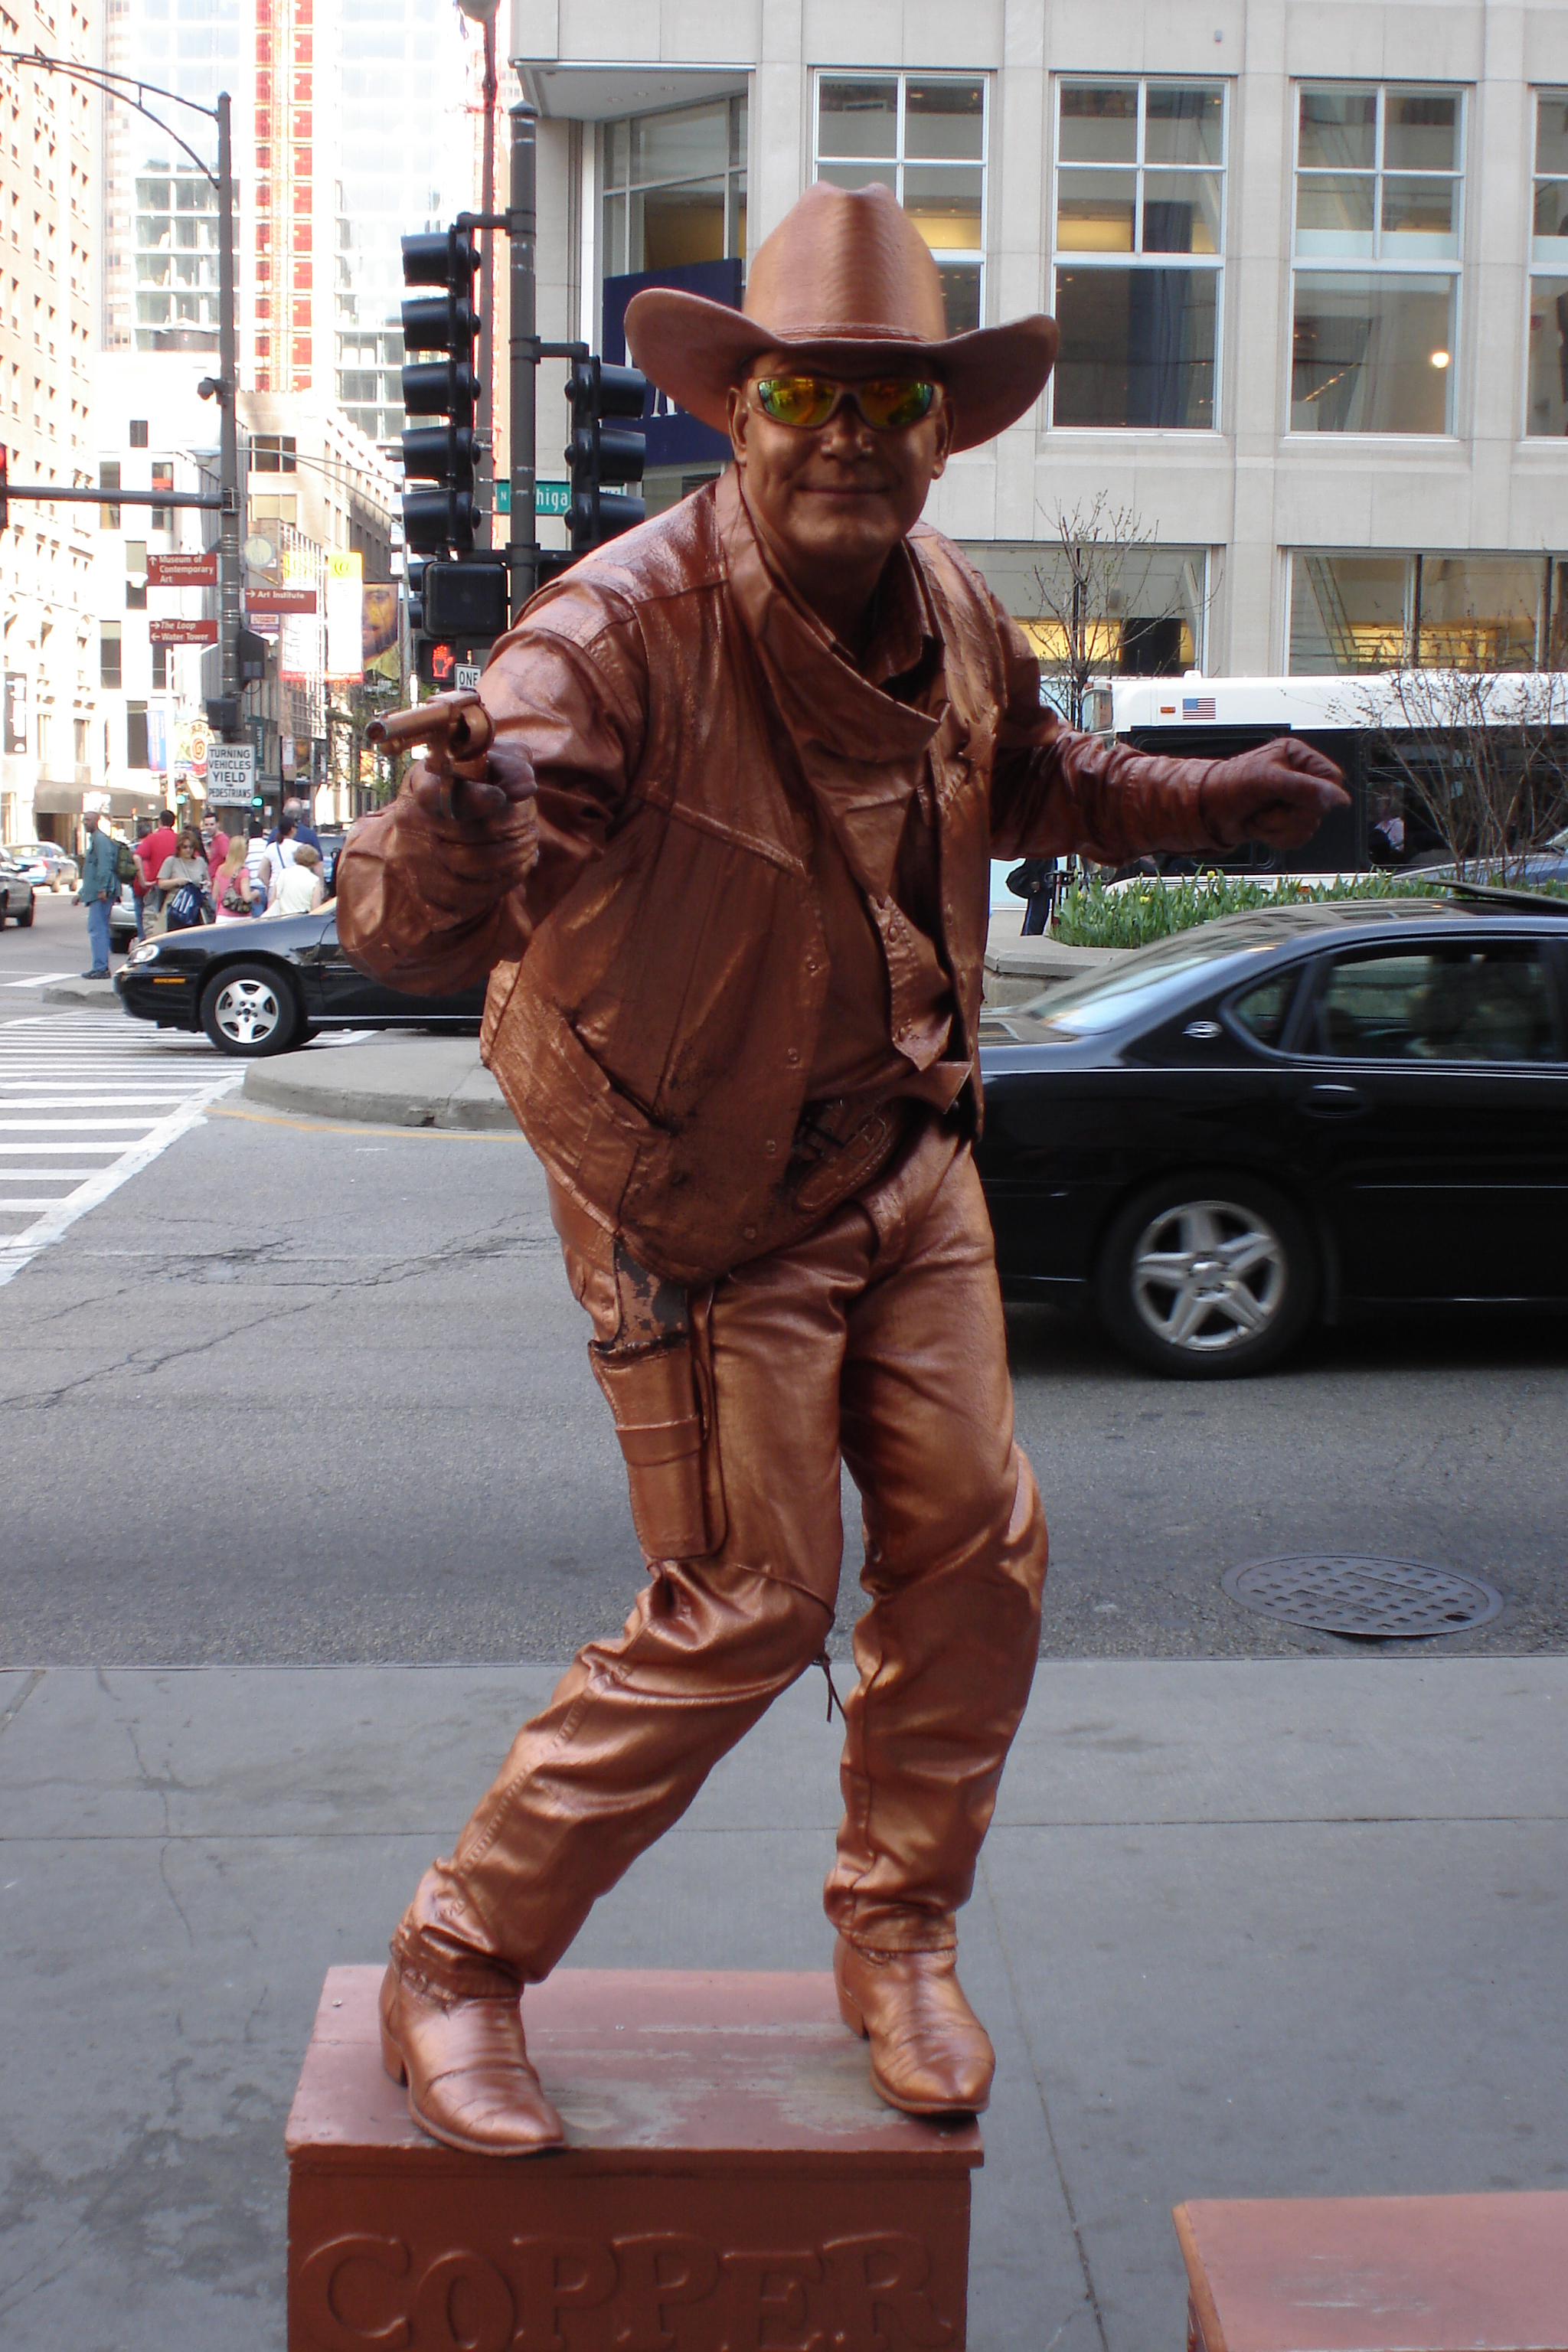 The_Copper_Cowboy_living_statue.jpg